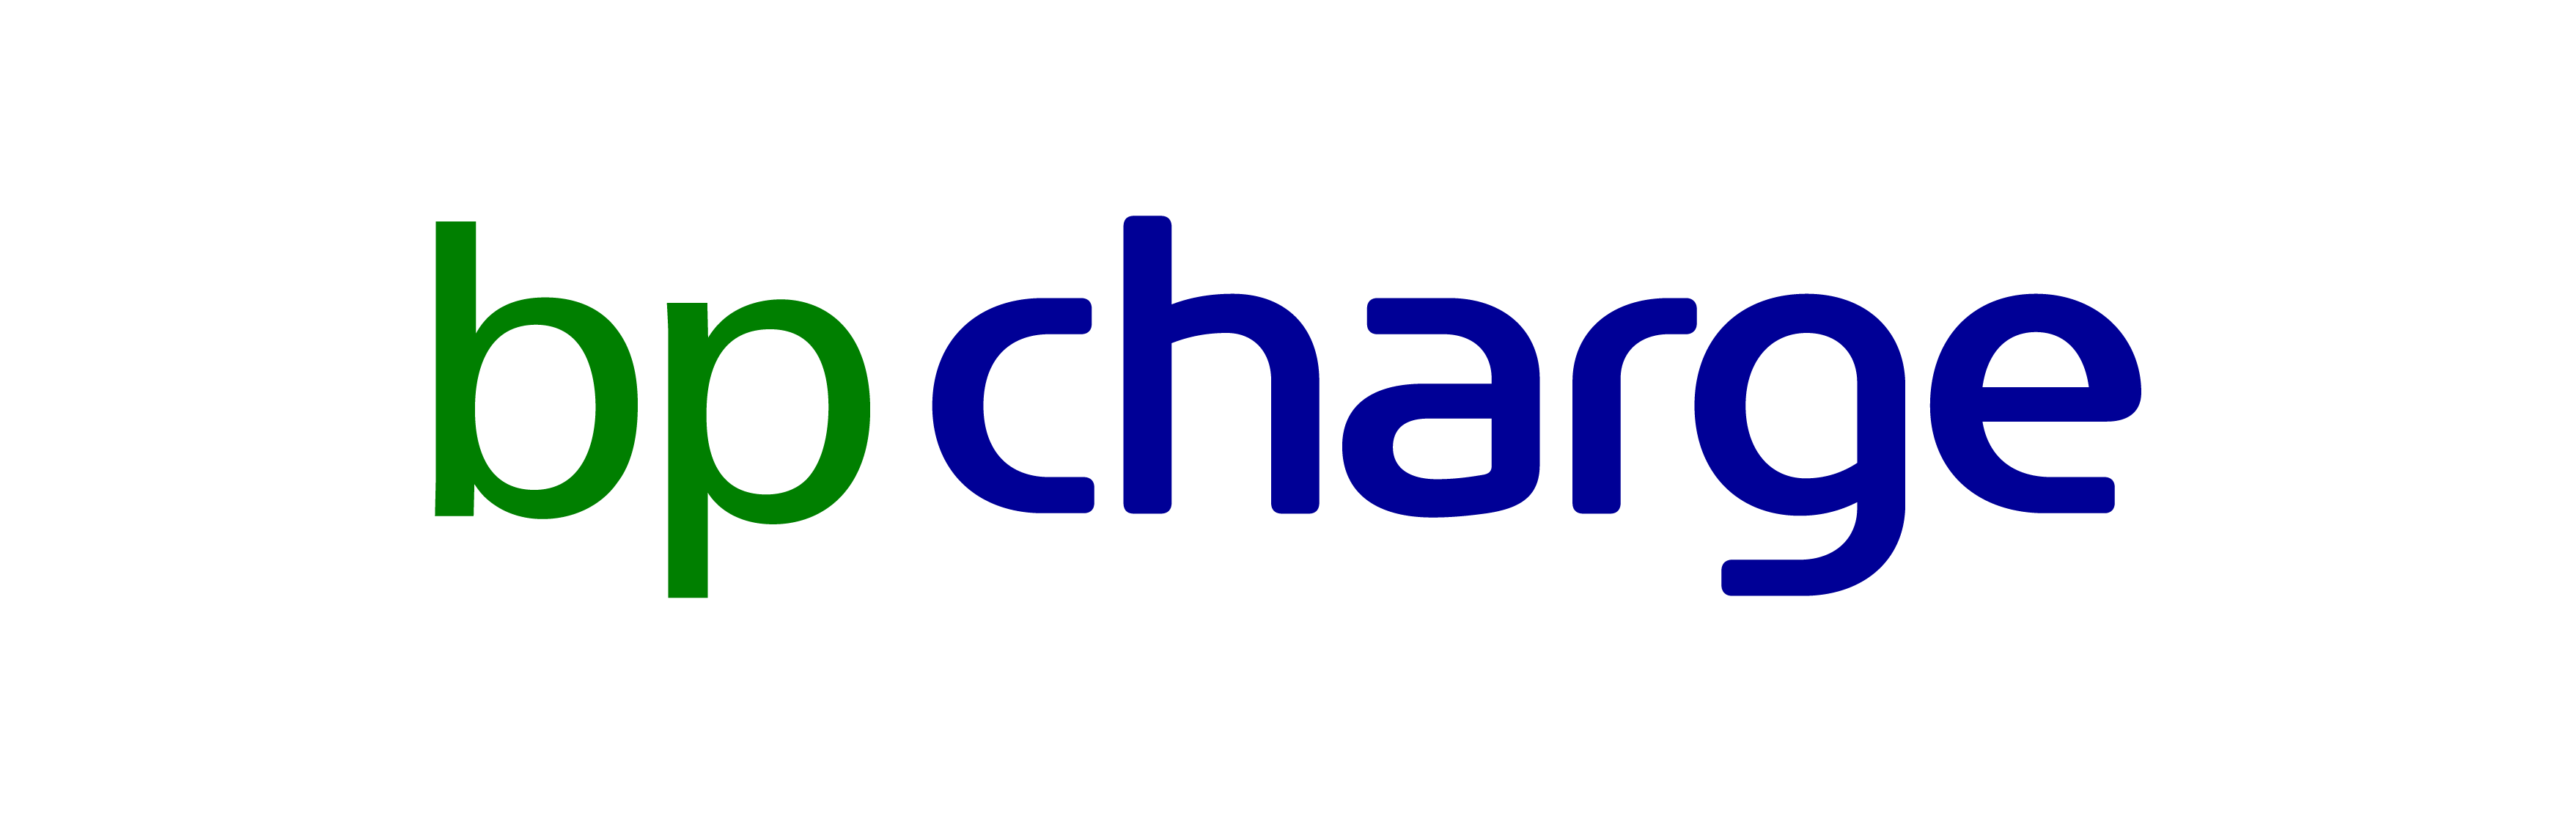 bp charge logo